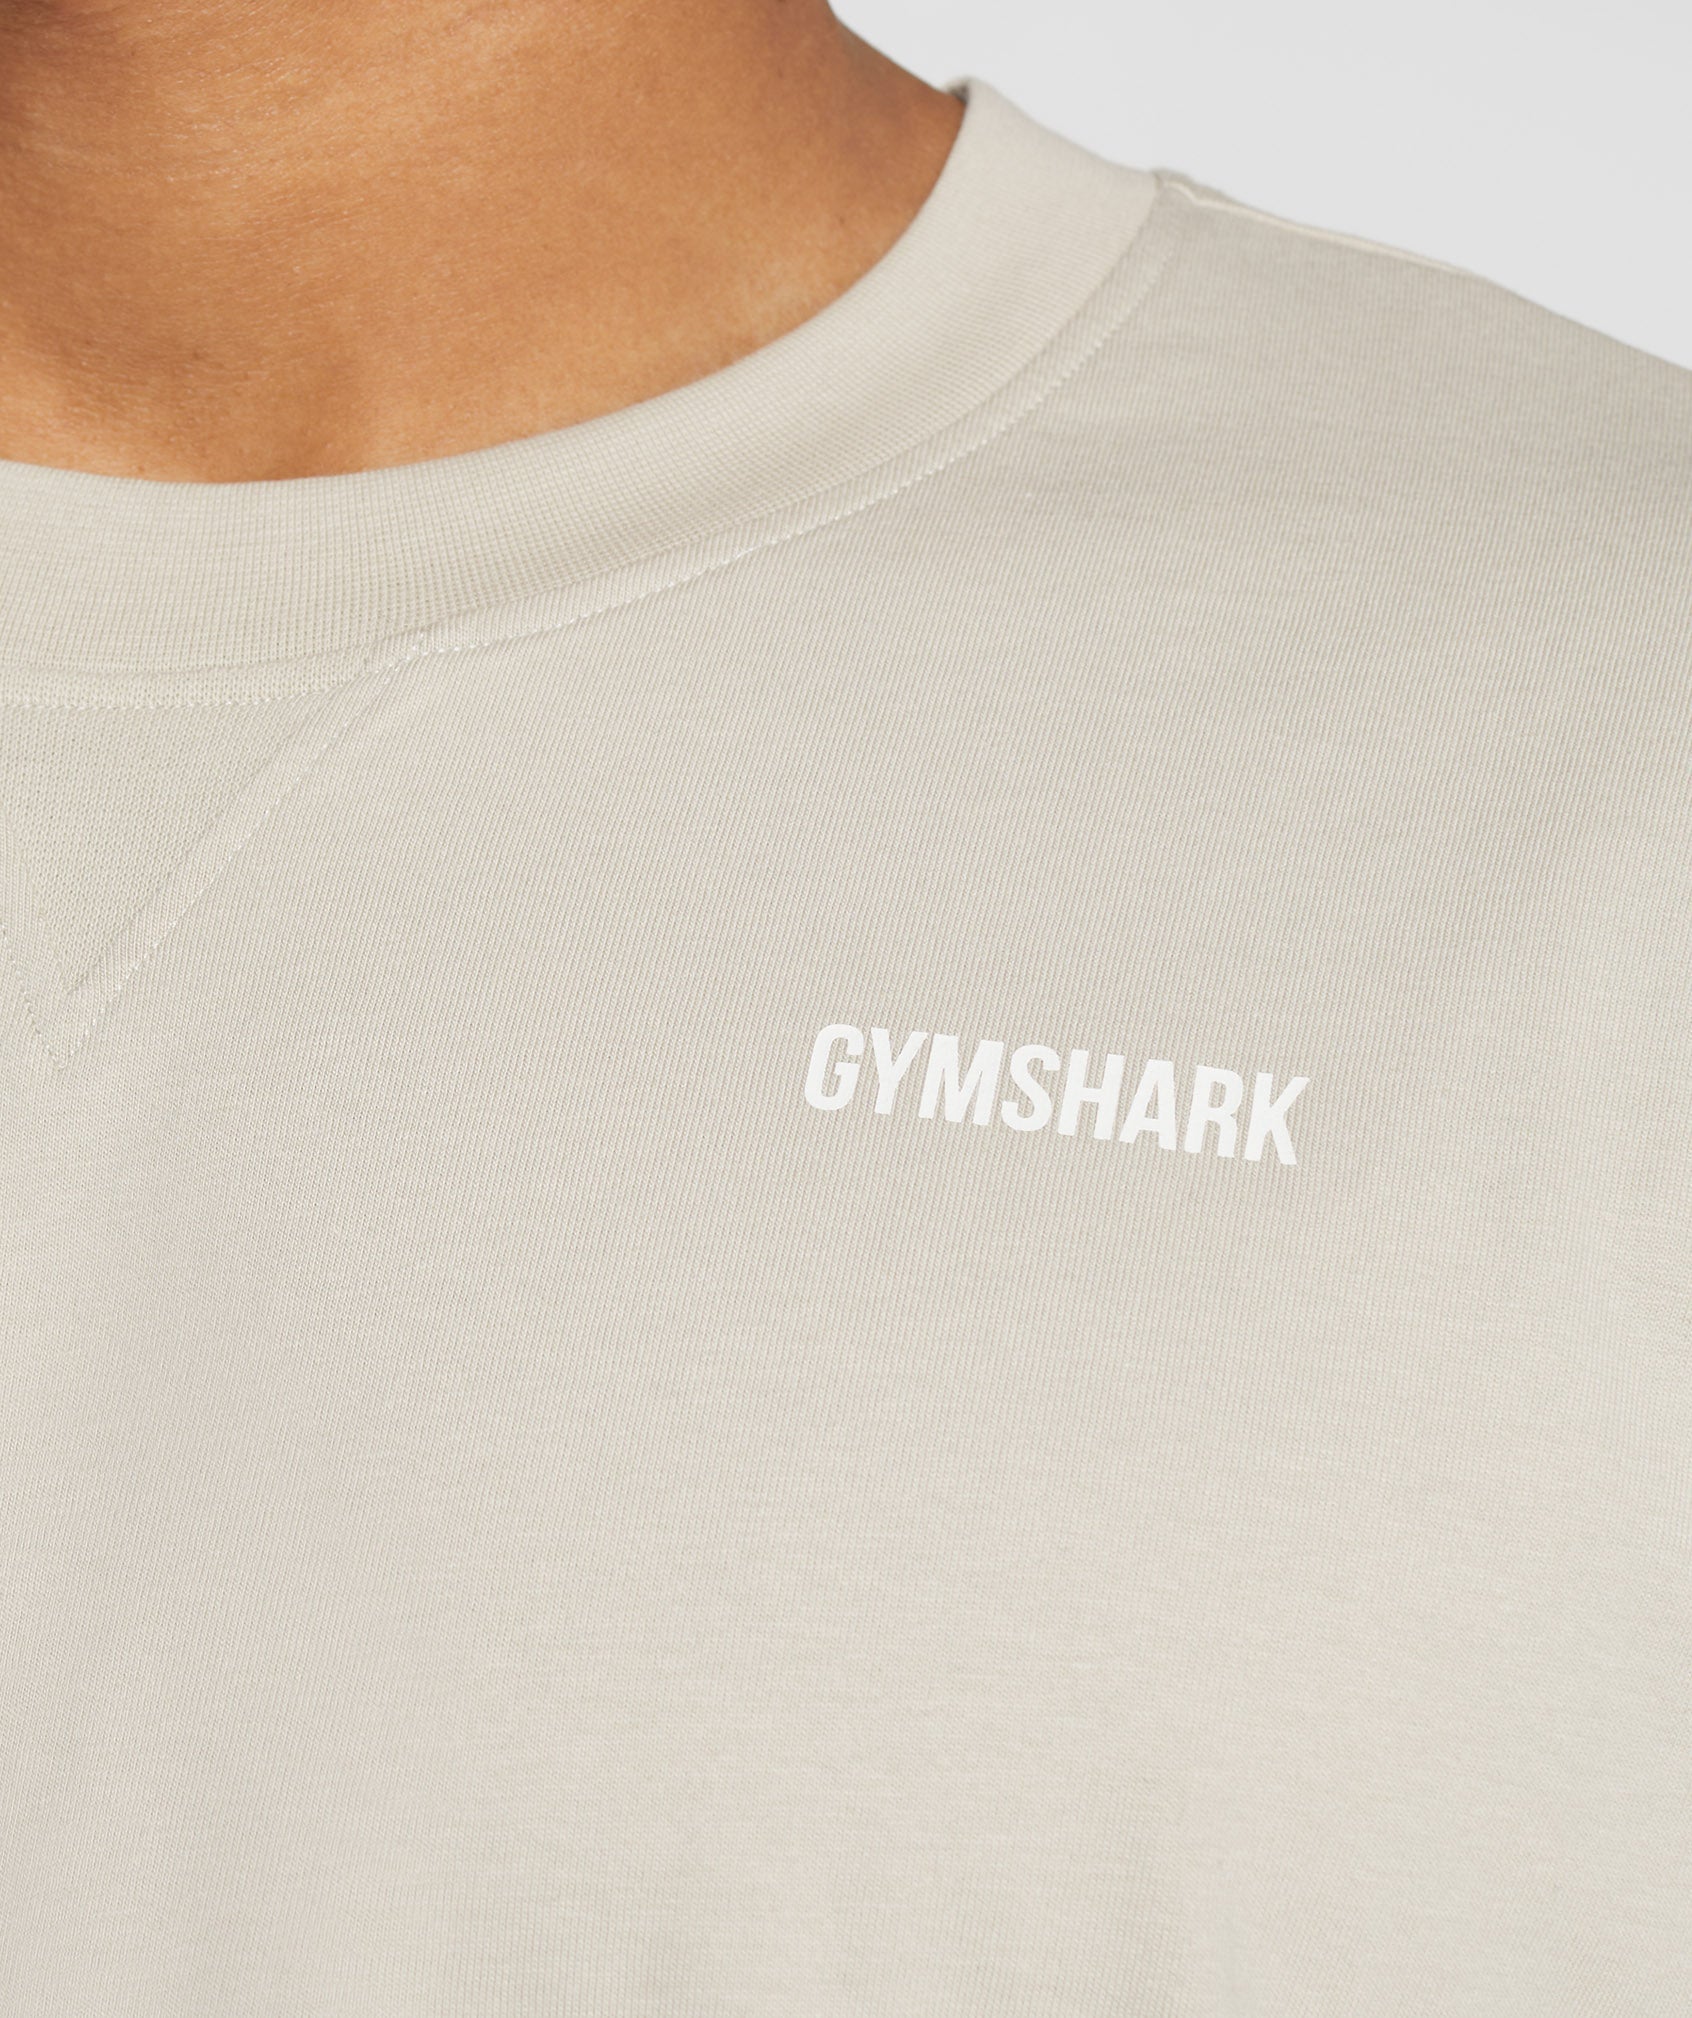 Gymshark Rest Day Sweats Long Sleeve T-Shirt - Pebble Grey